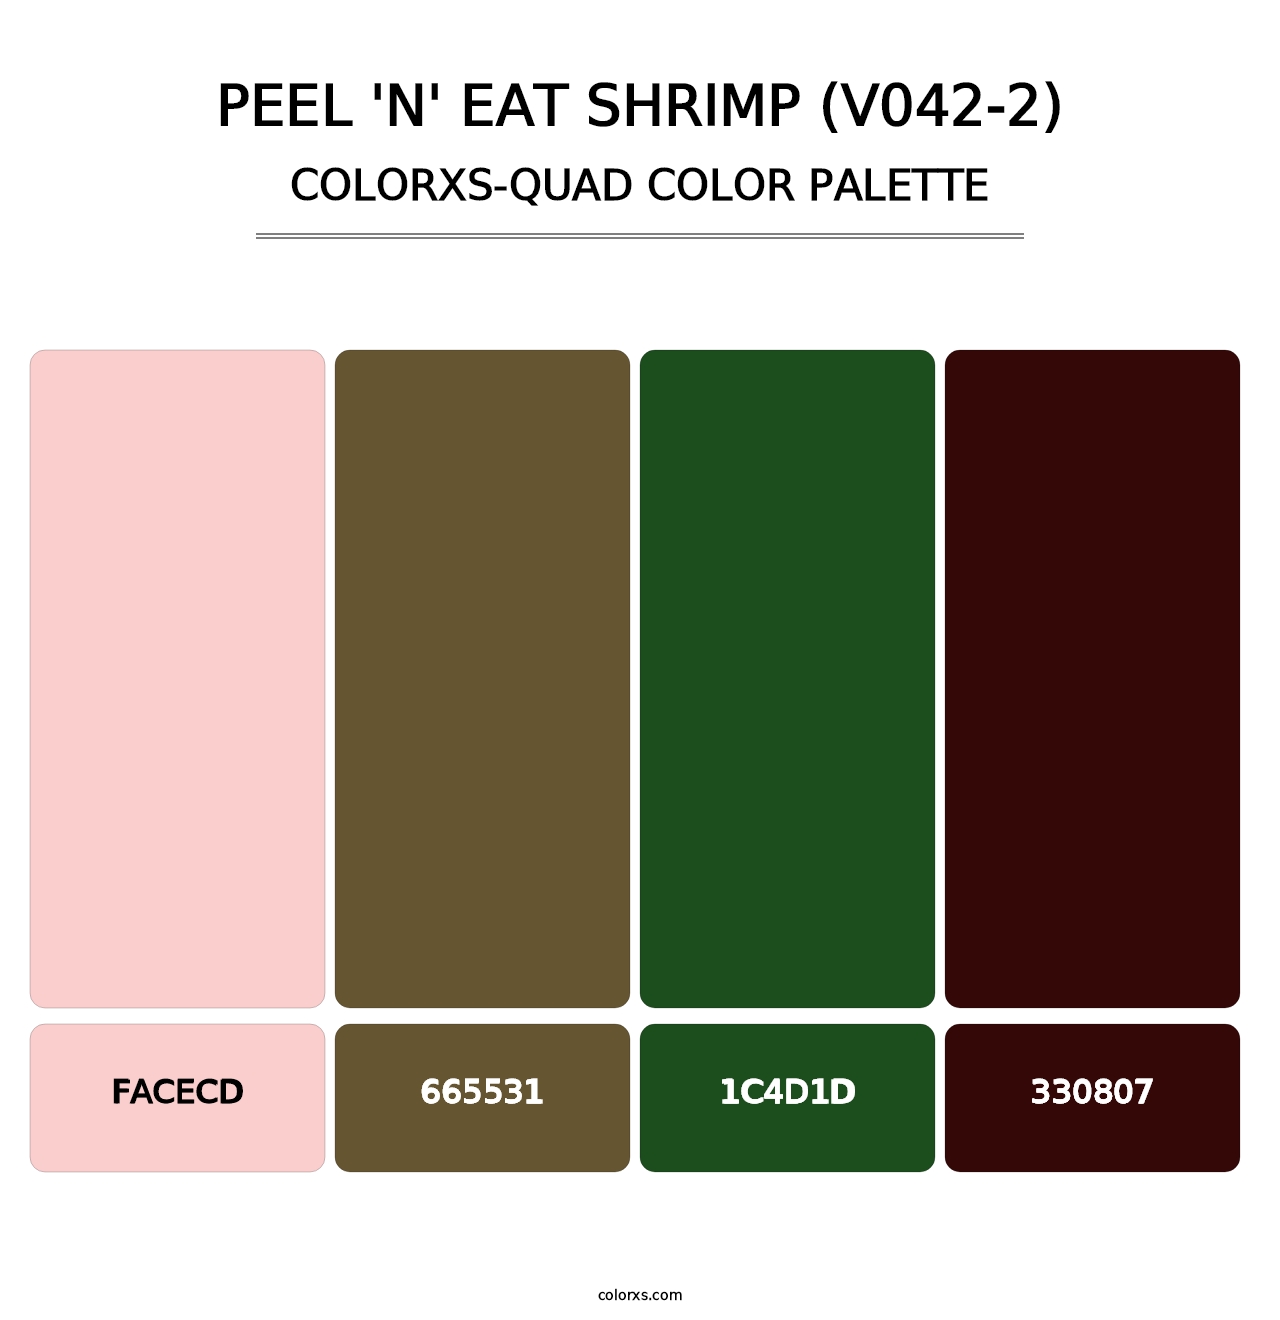 Peel 'n' Eat Shrimp (V042-2) - Colorxs Quad Palette